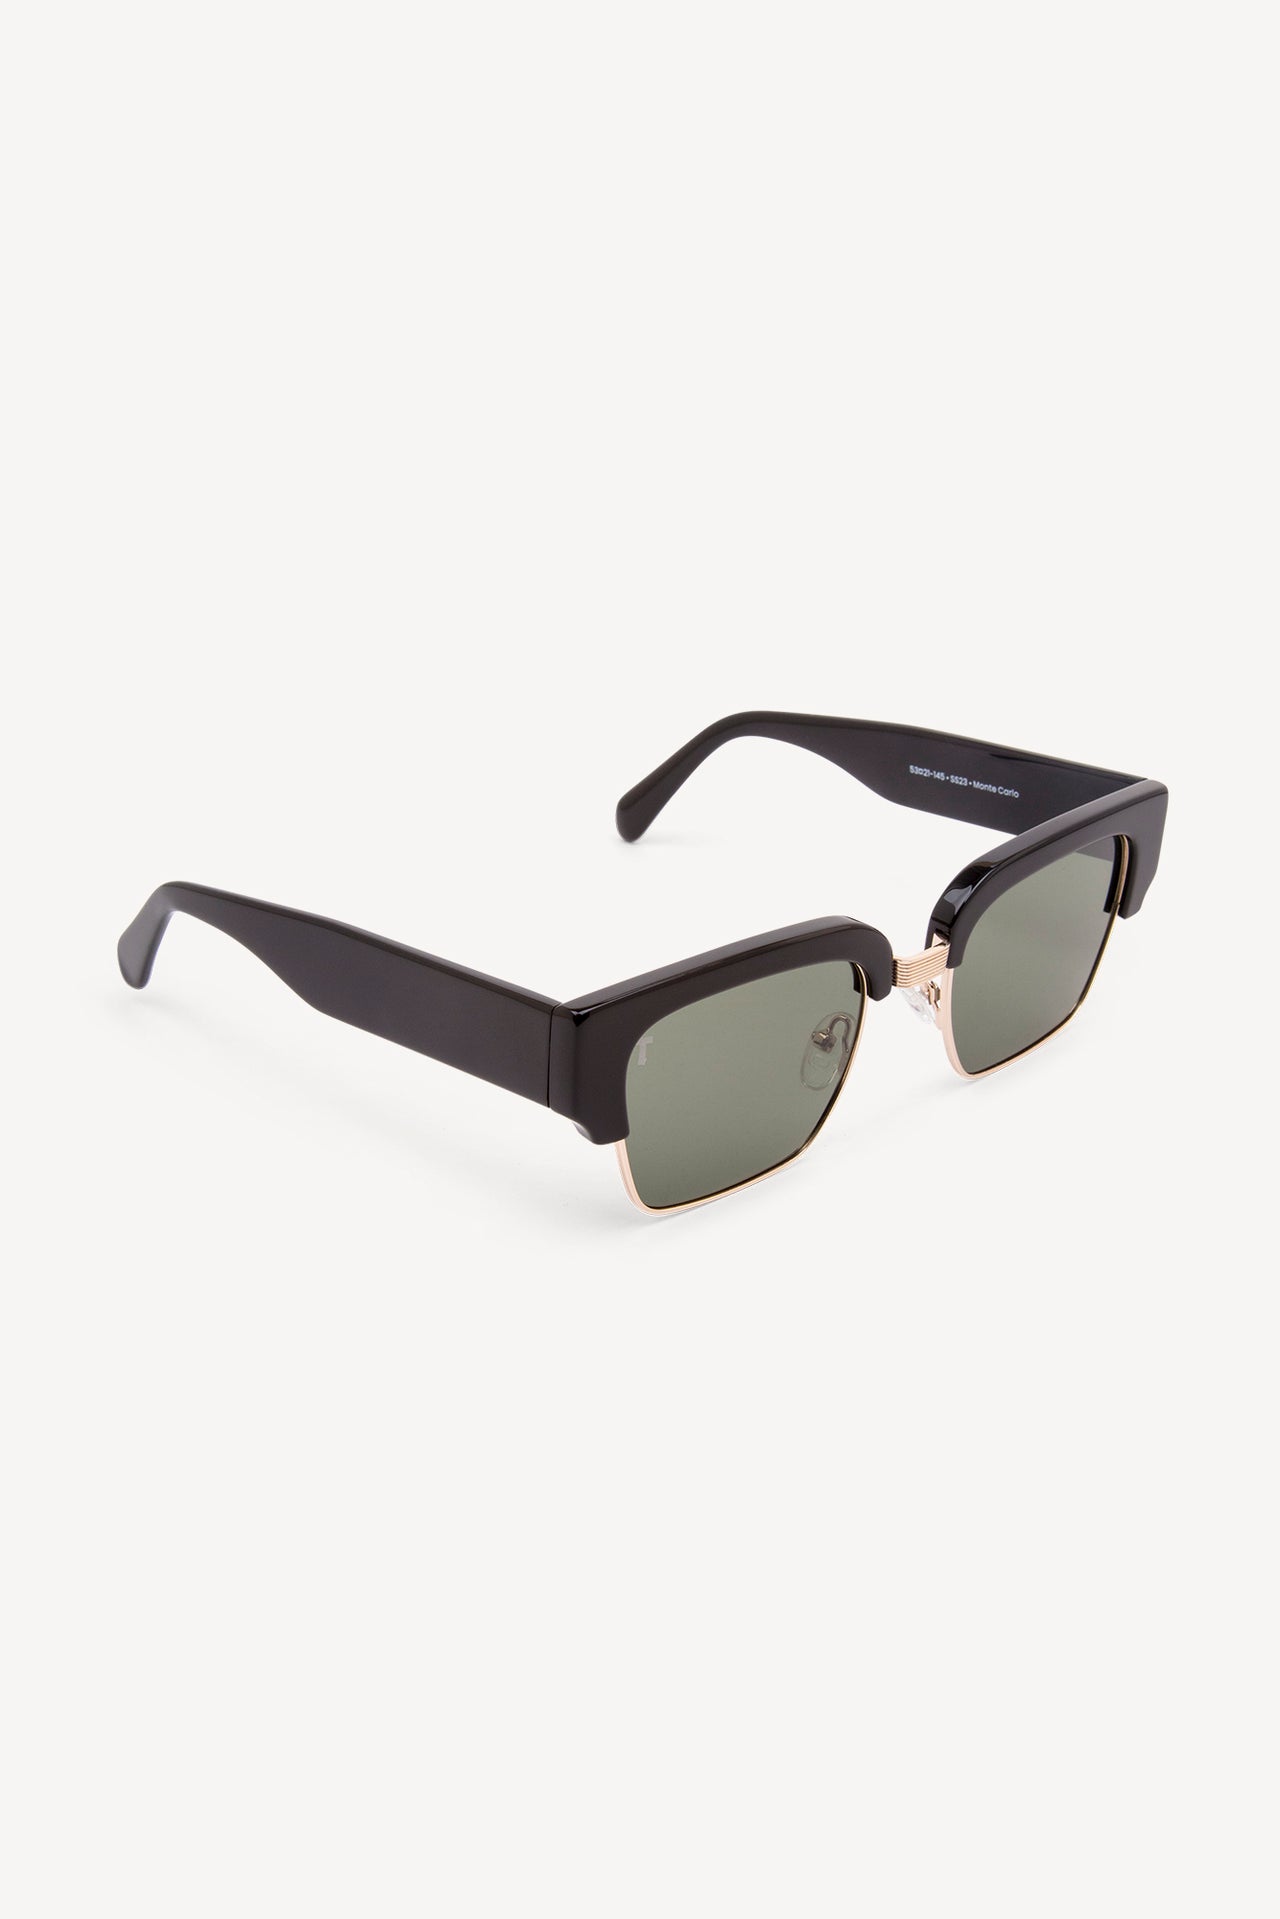 TOATIE Monte Carlo Sunglasses BLACK/GREEN